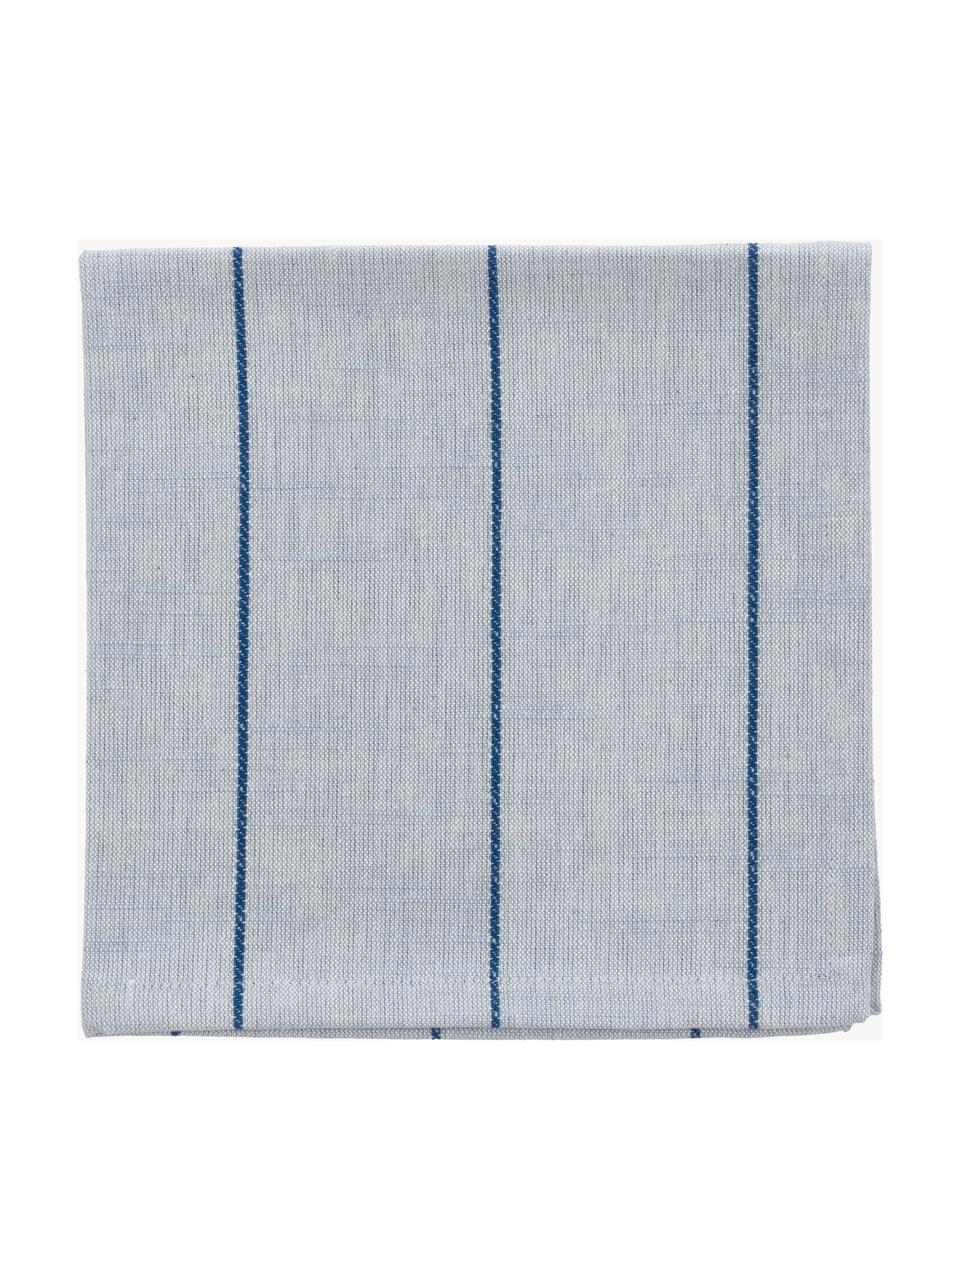 Stoffen servetten Line, 4 stuks, 100% katoen, Licht- en donkerblauw, B 40 x L 40 cm